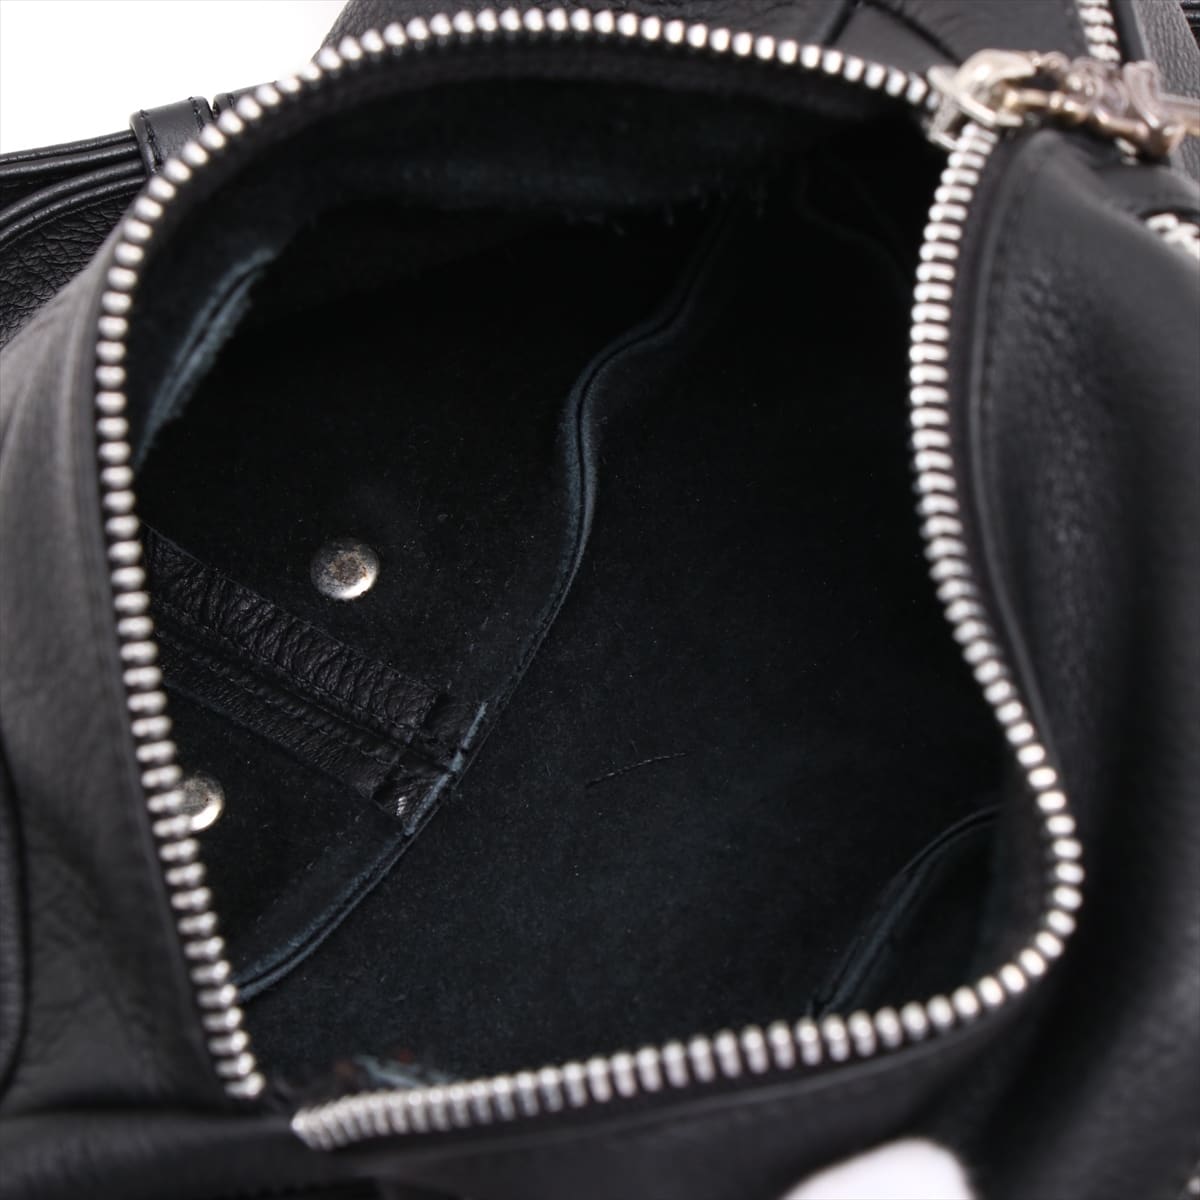 Chrome Hearts Snat Pack Waist bag Leather